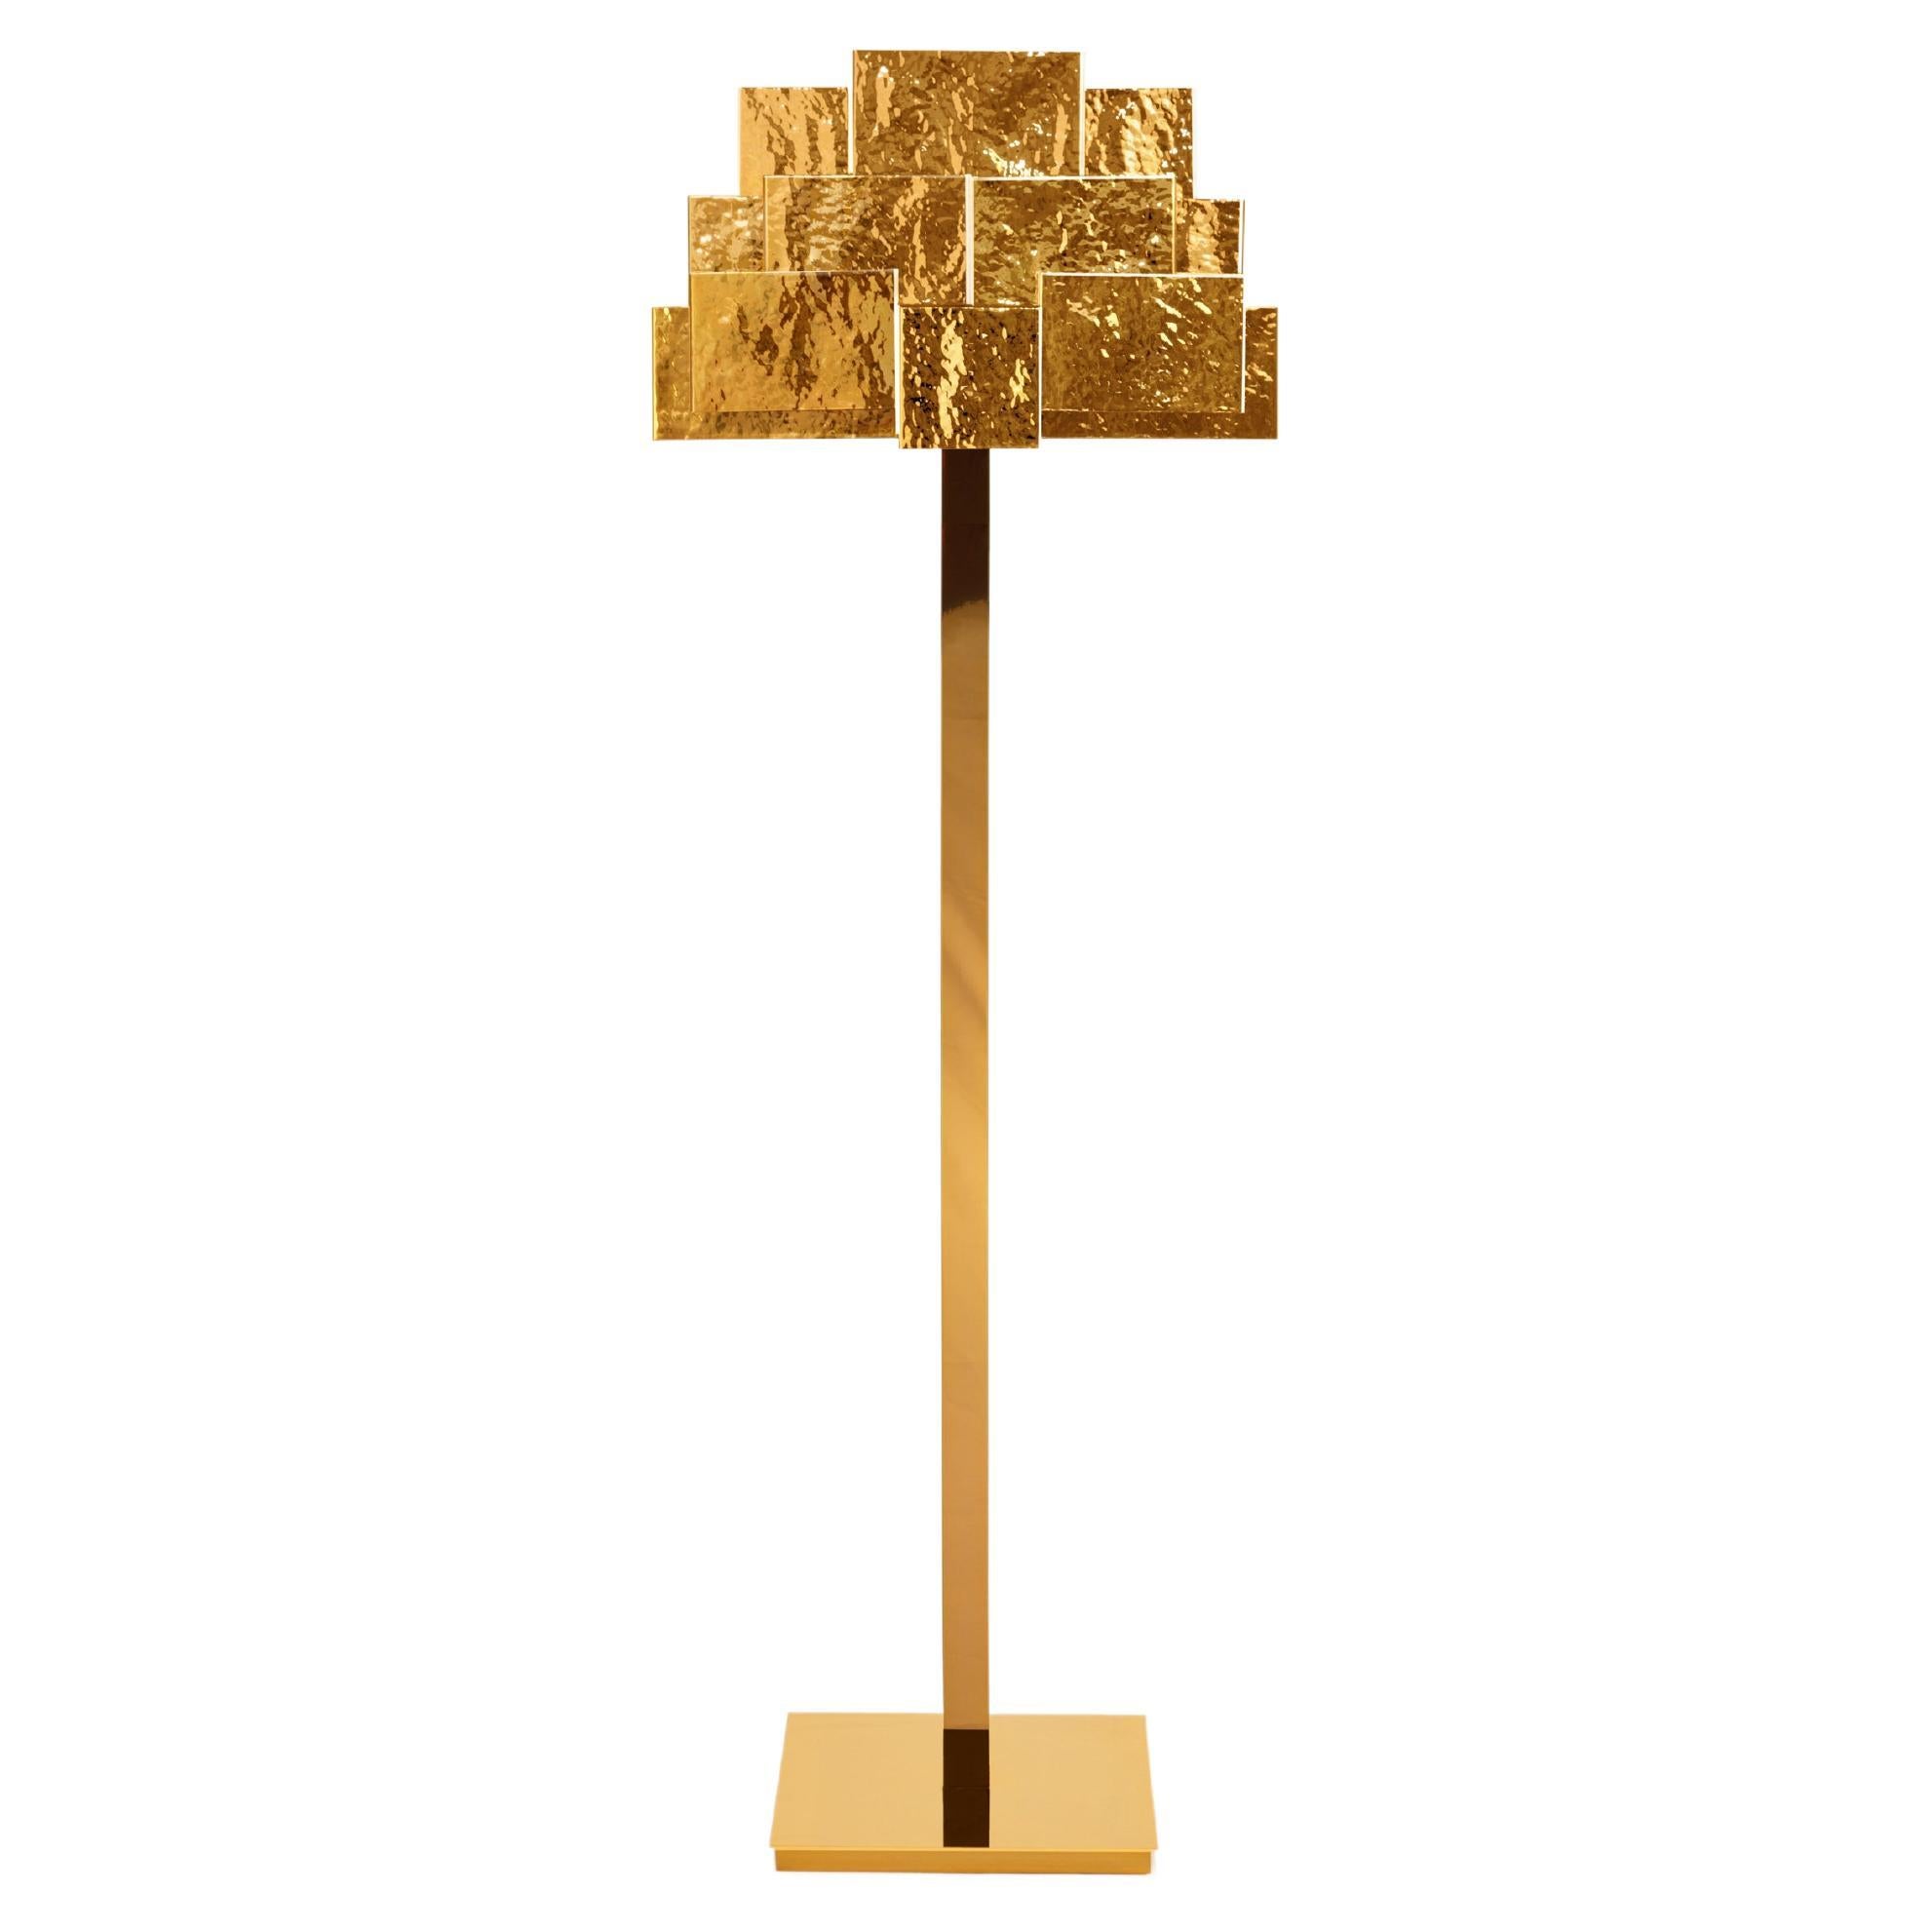 Inspiring Trees Hammered Golden Brass Floor Lamp by InsidherLand For Sale